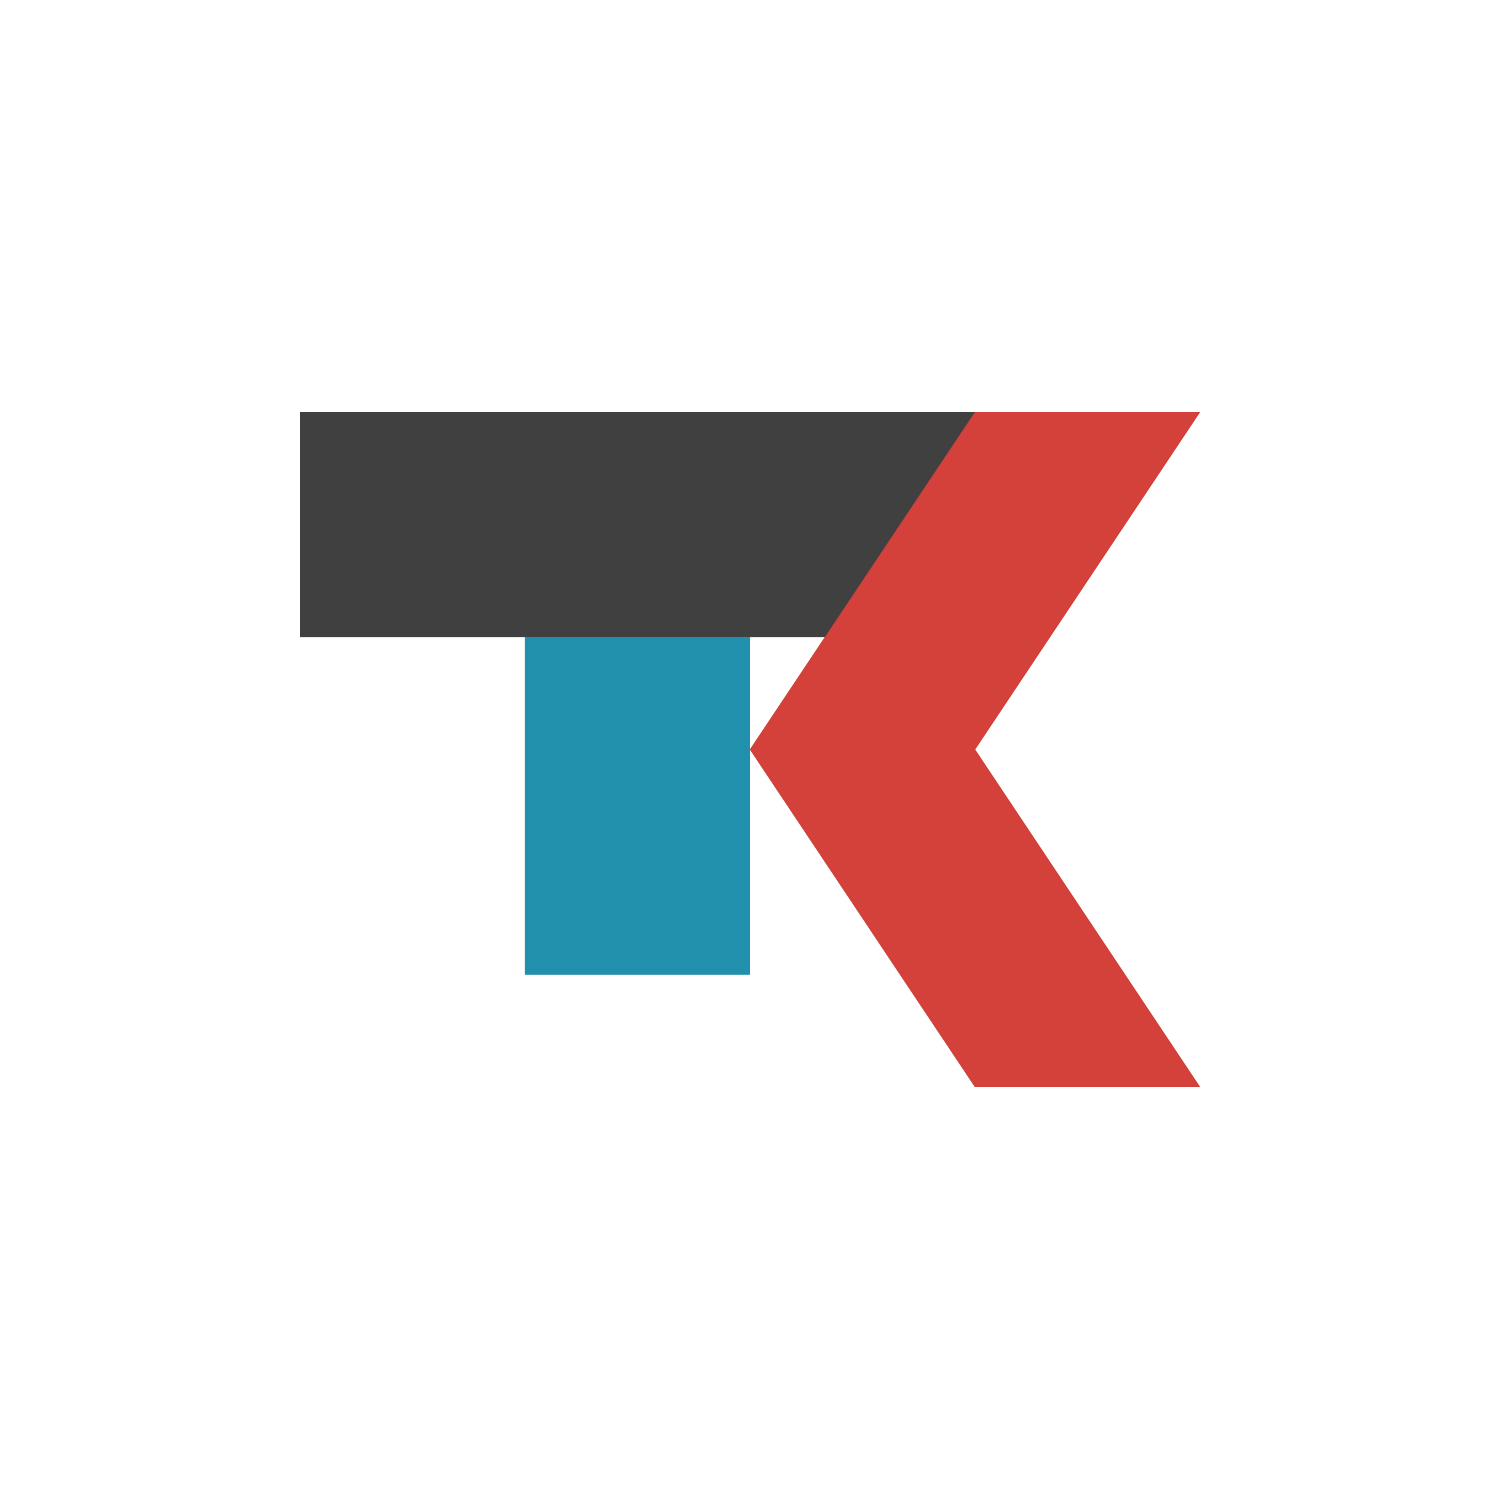 TK Repair Logo Design - Greeley, CO Oilfield Services Company